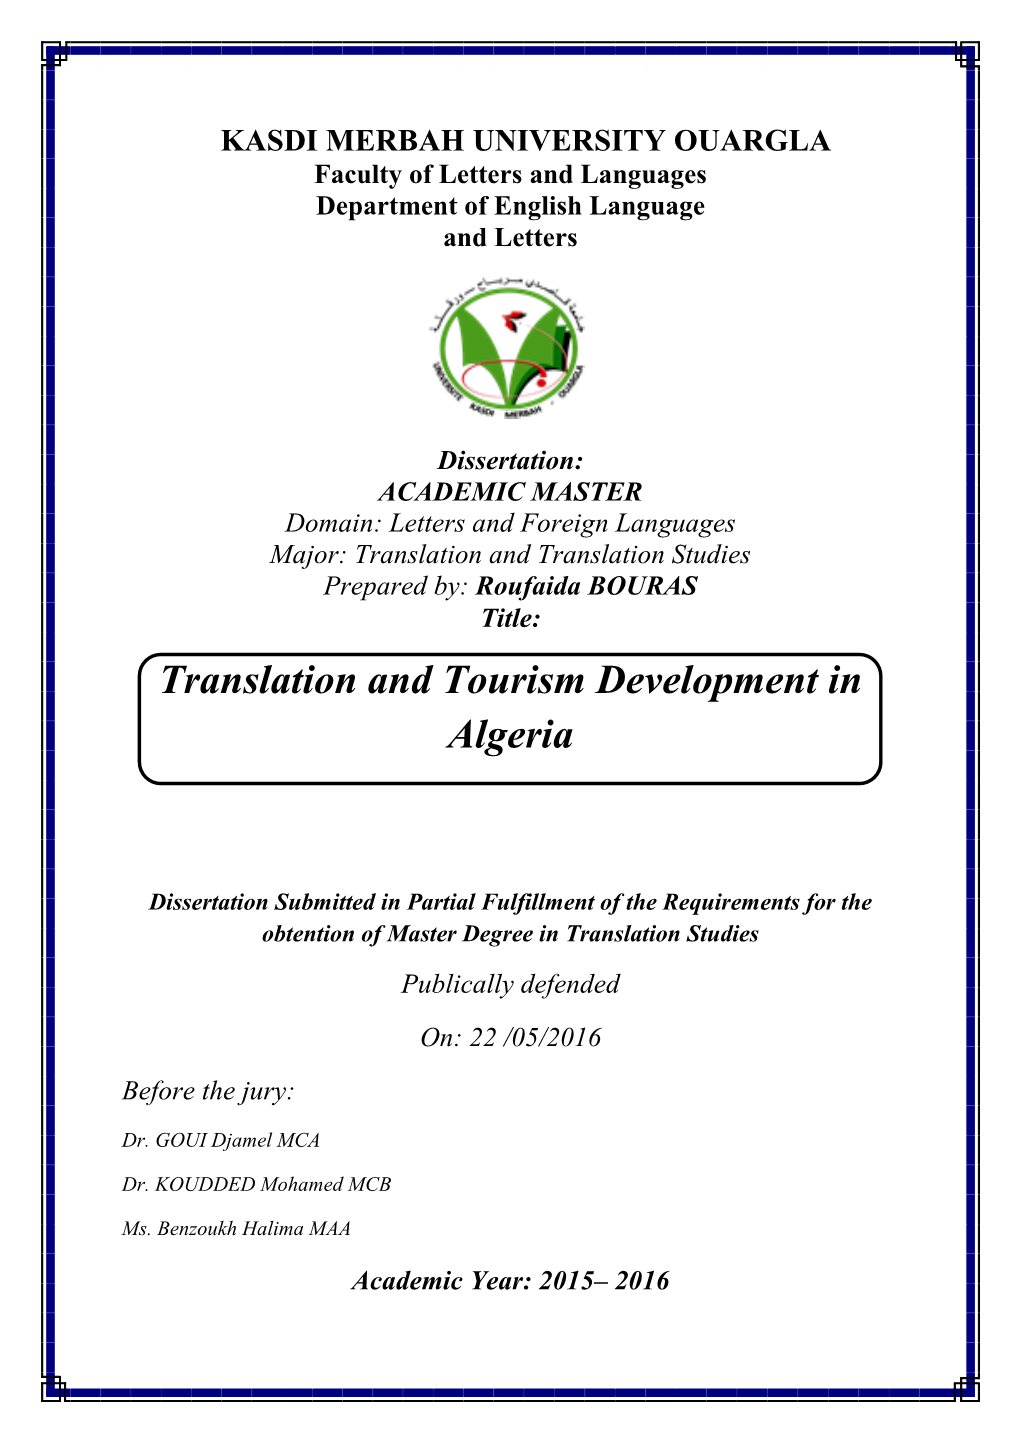 Translation and Tourism Development in Algeria